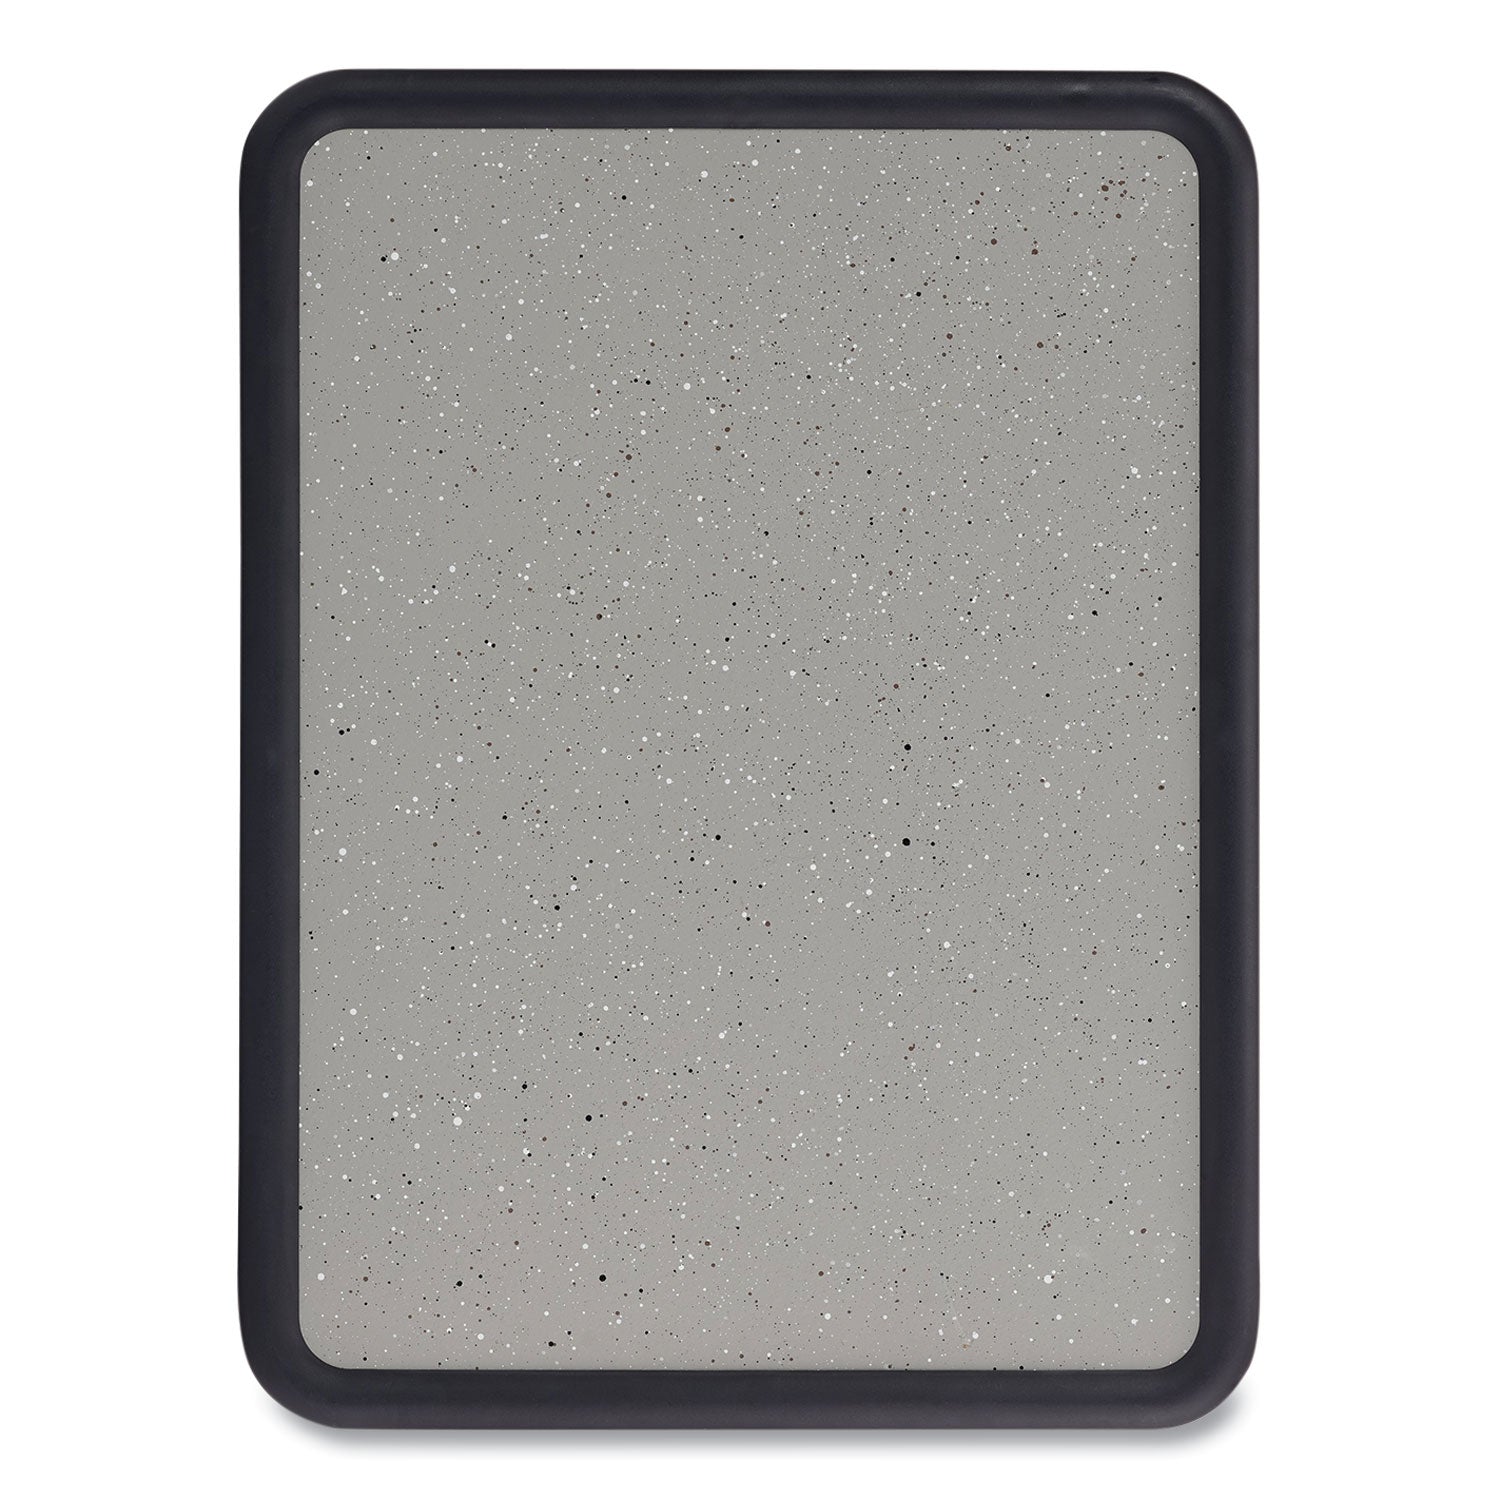 infinity-glass-dry-erase-board-presentation-easel-24-x-36-white-surface-frameless_qrtecm43g - 3